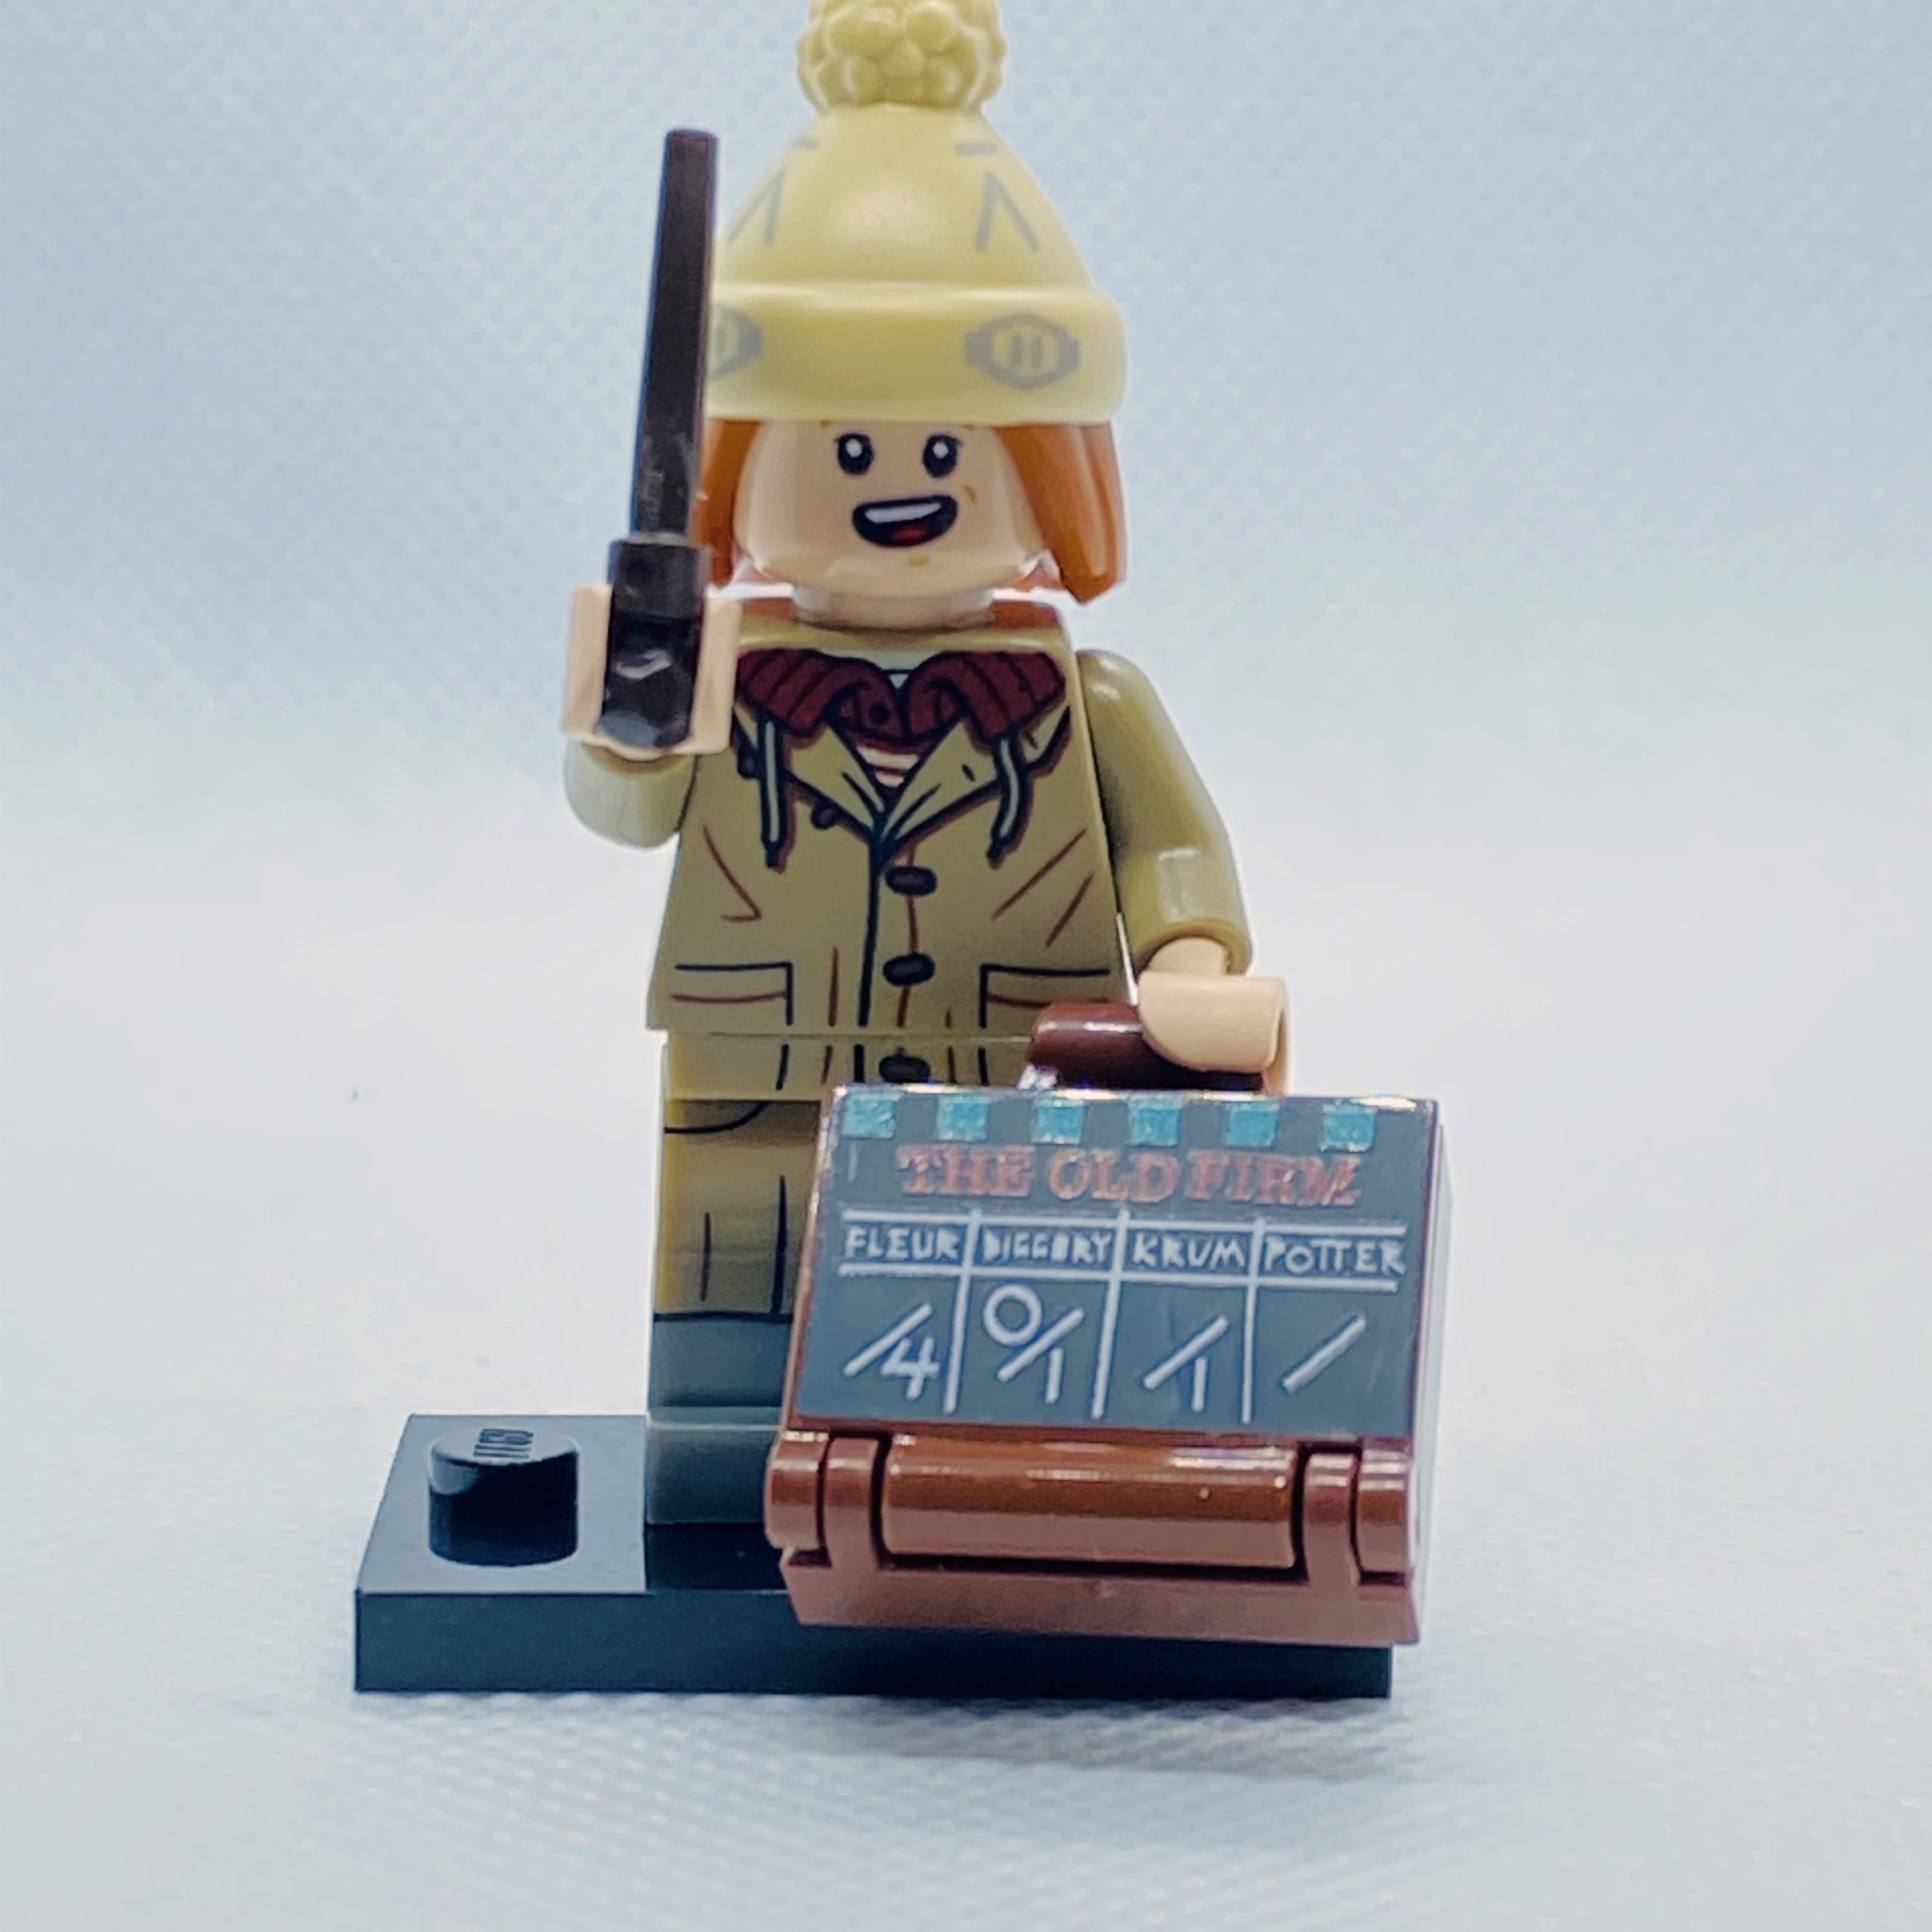 10/16 Lego Harry Potter Minifigura Serie 2-Frederick Weasley. BAGGED 71028